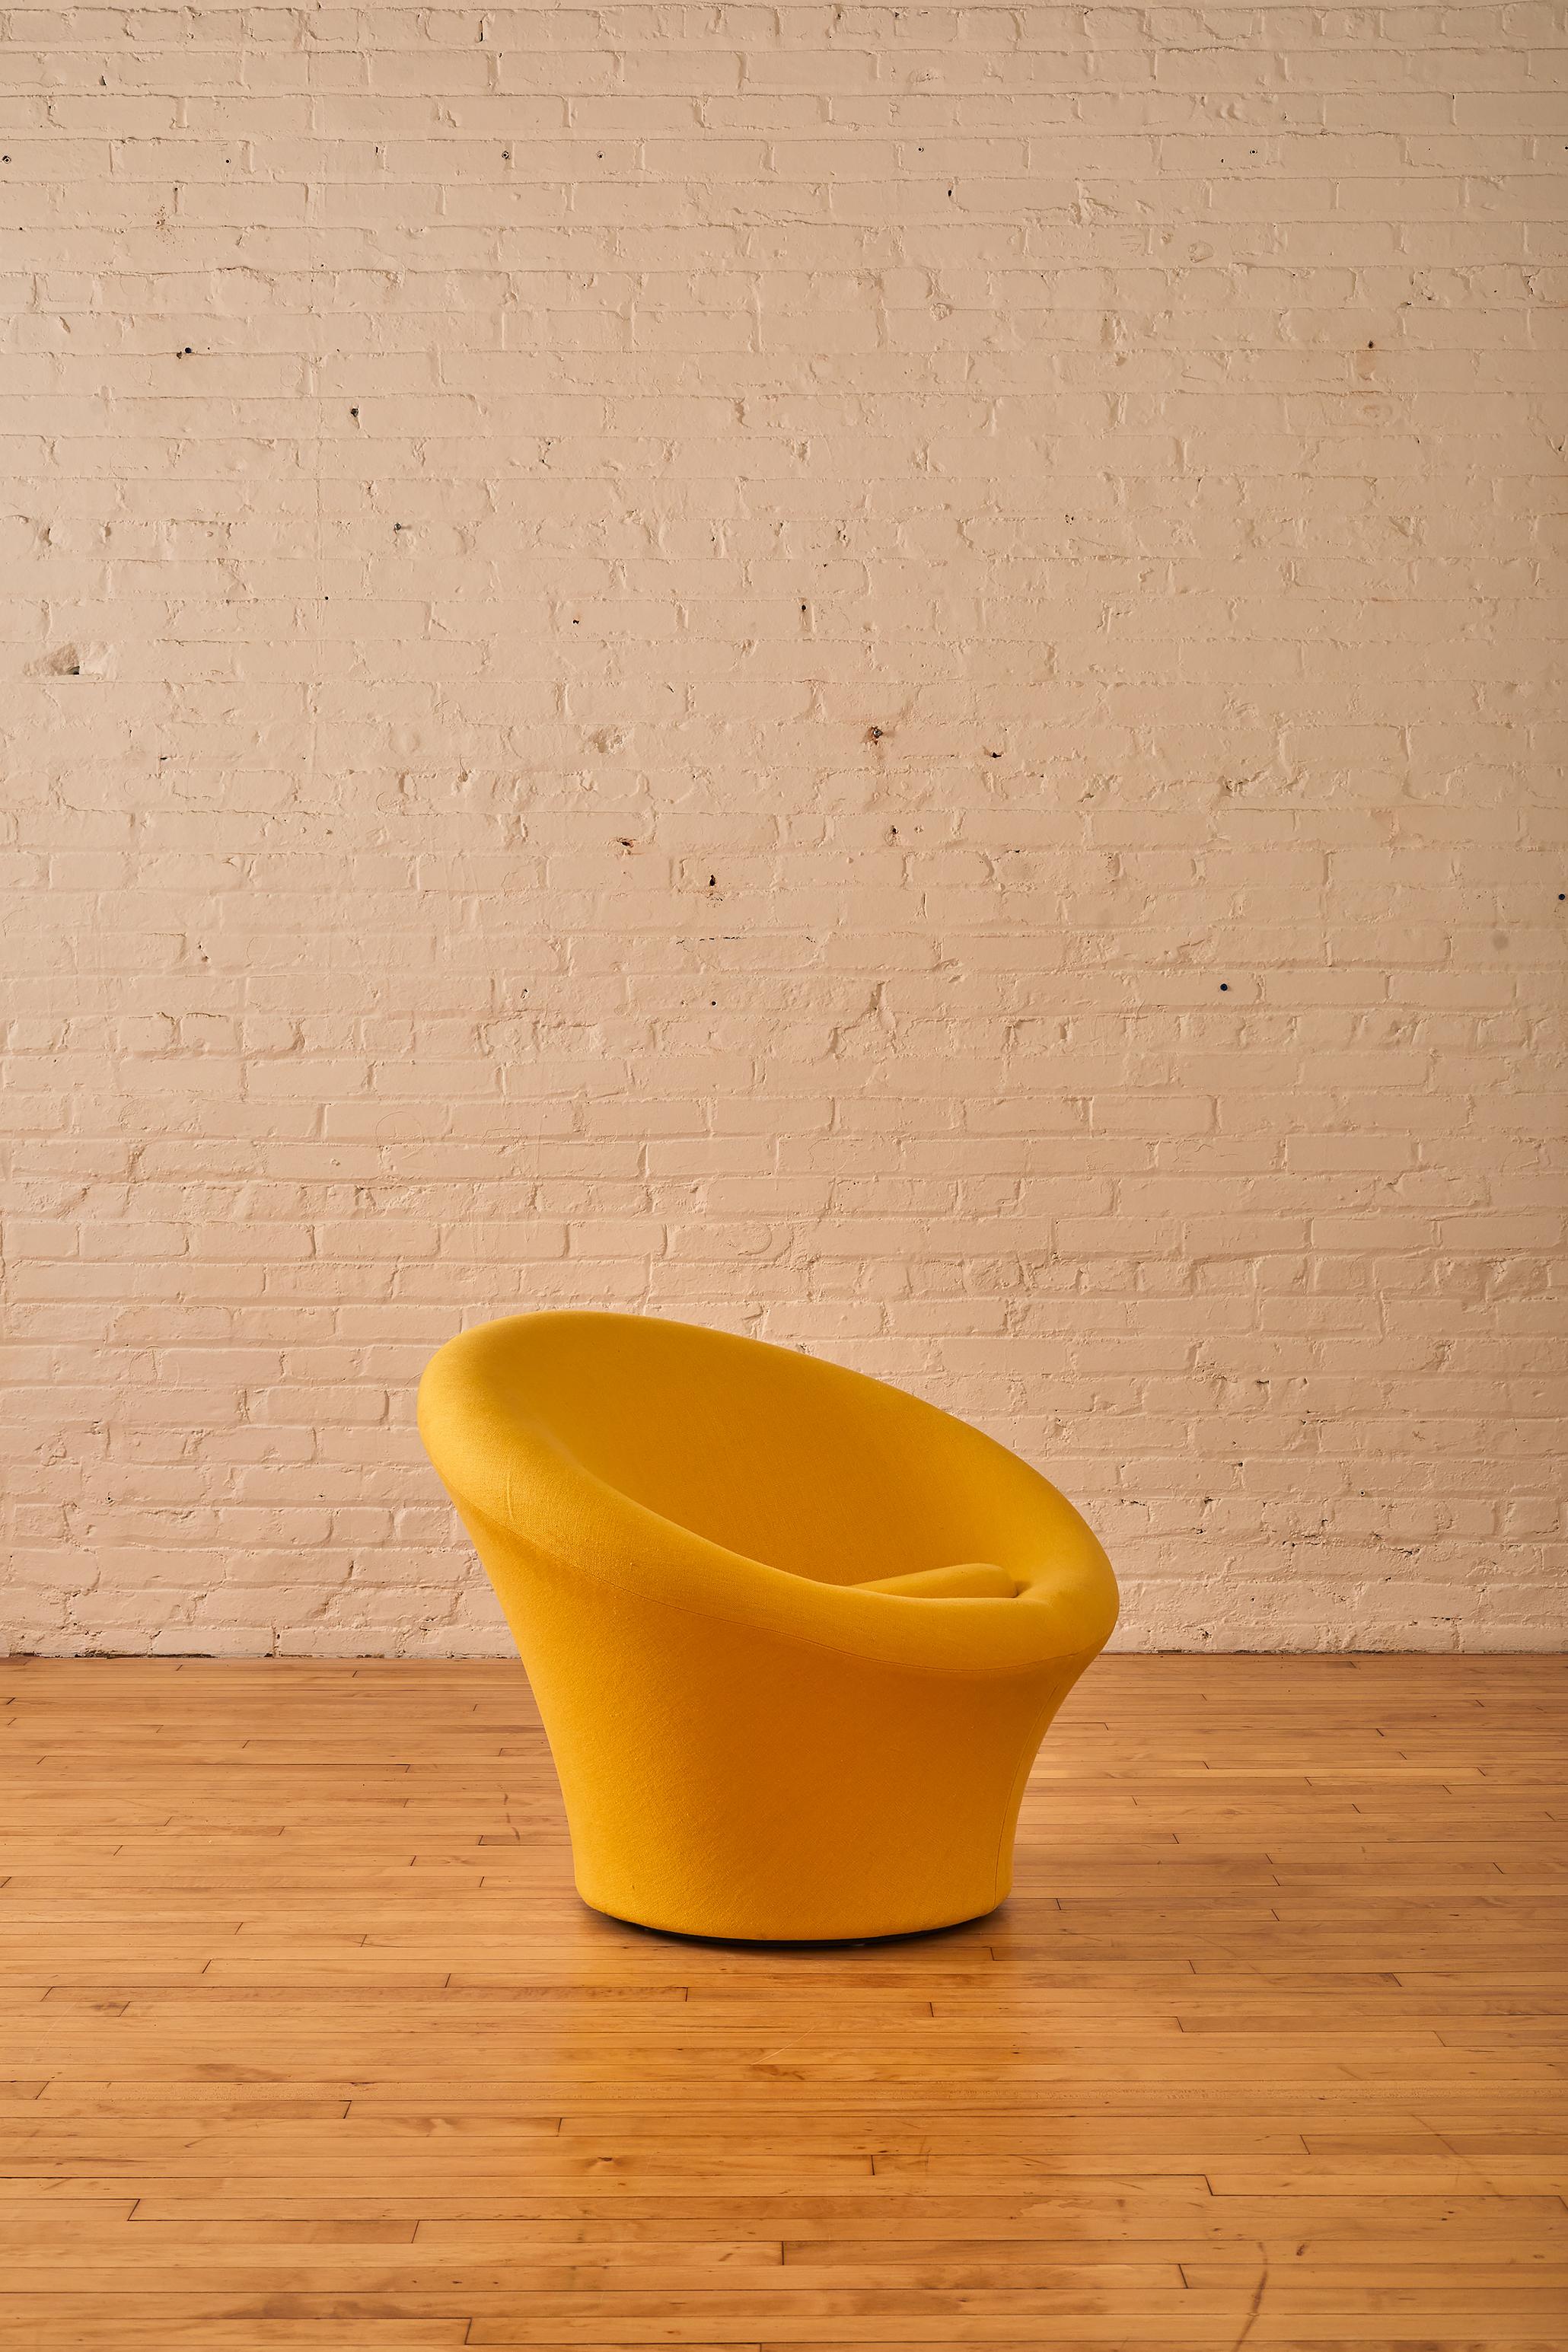 Mushroom chair (Model F560) by Pierre Paulin.

